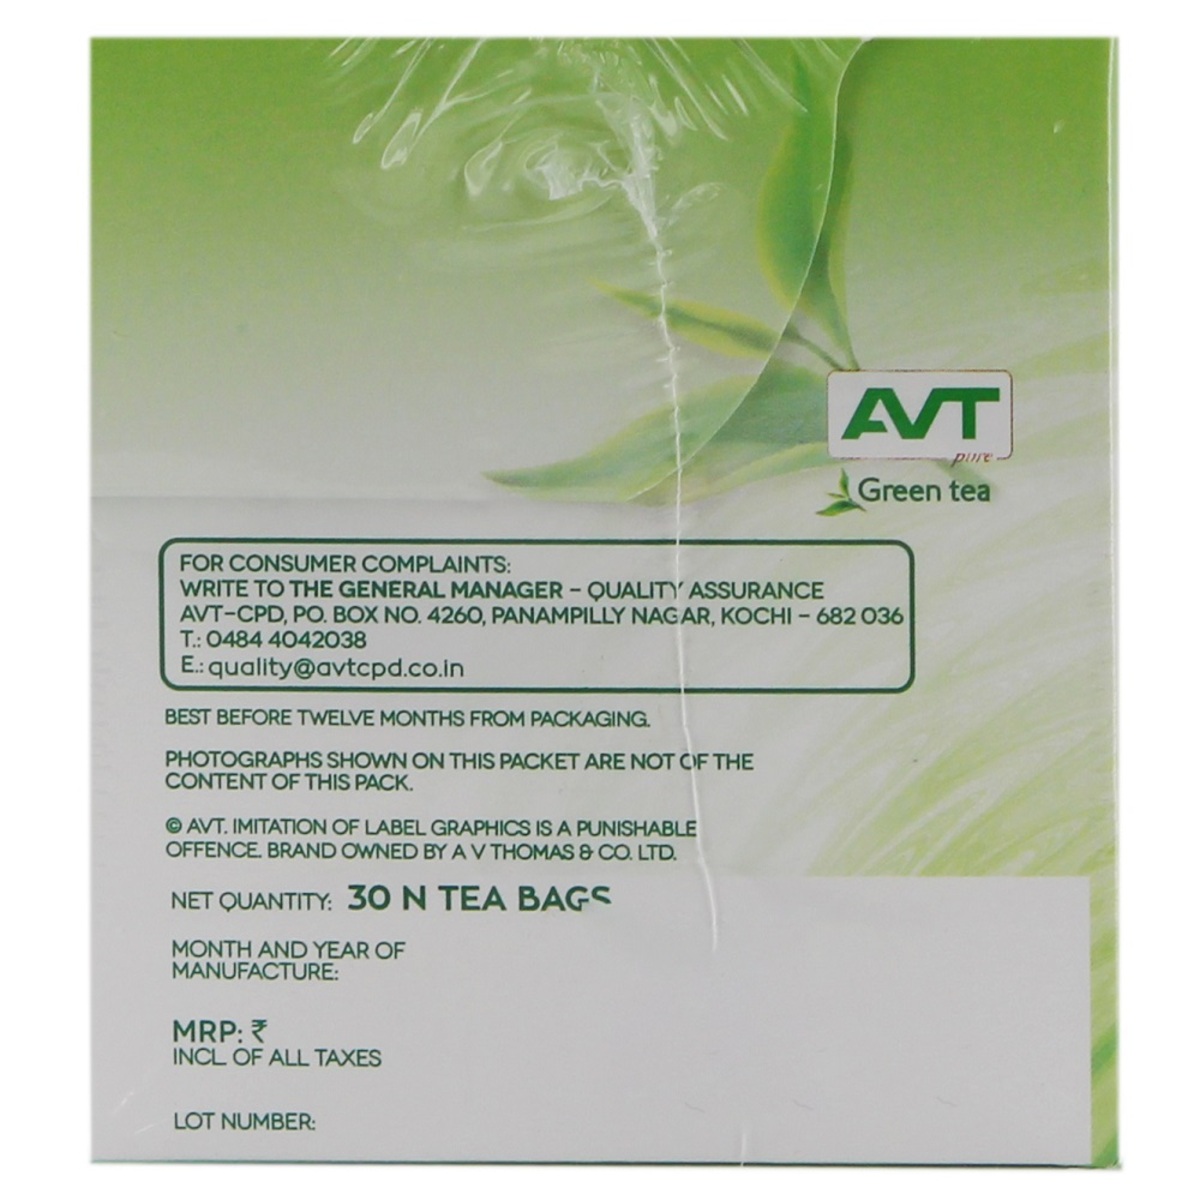 Avt Infuse Life Green Tea Bag 30's